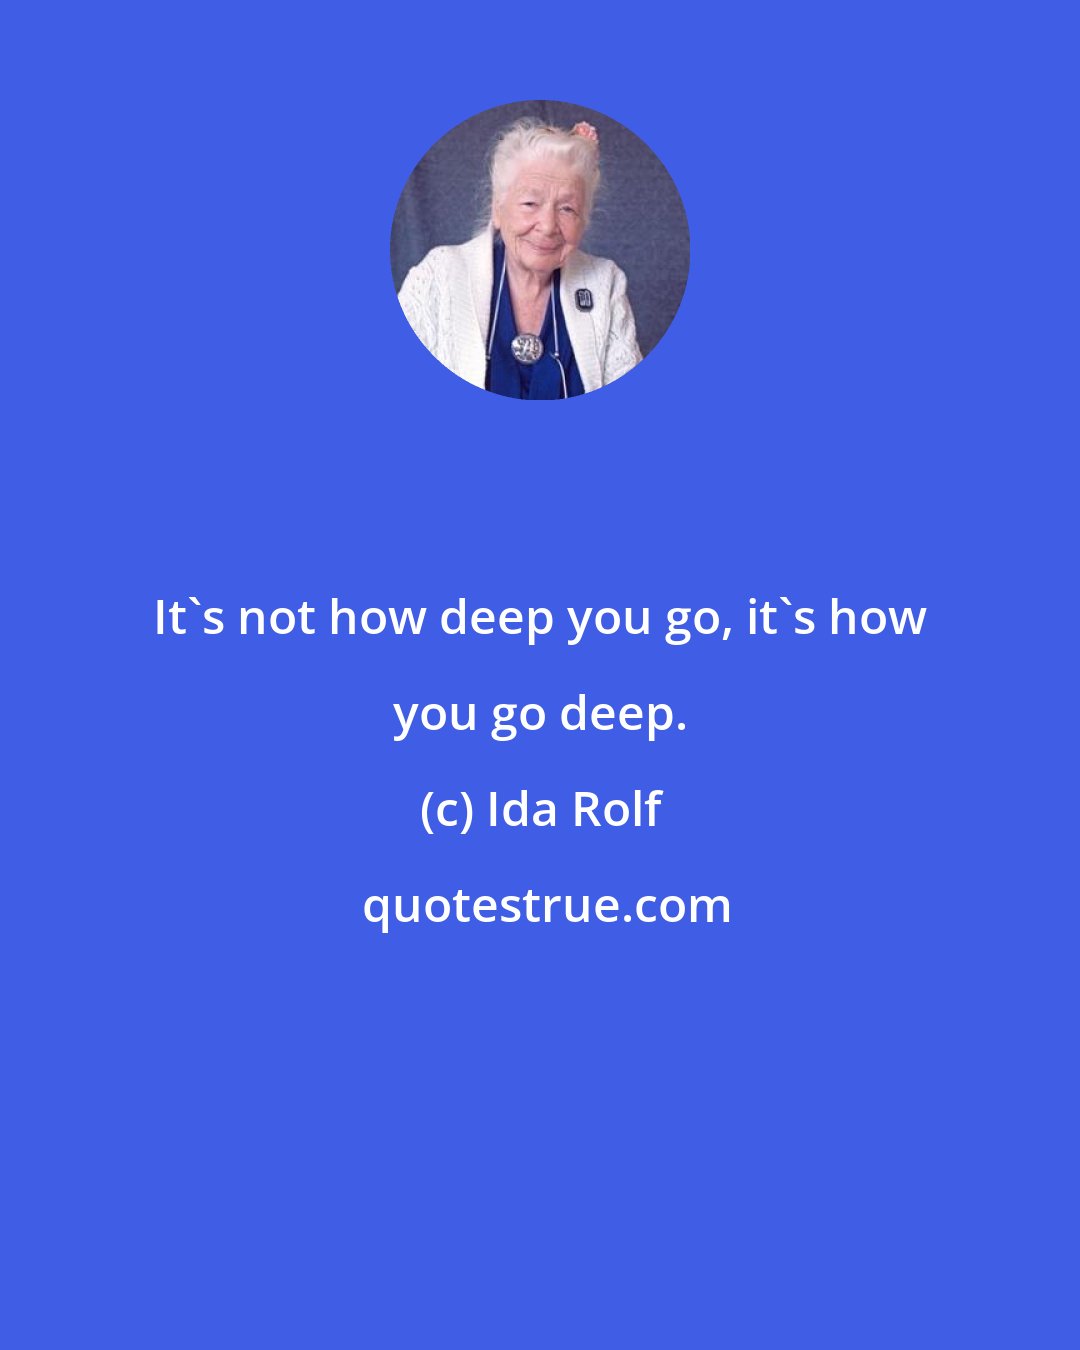 Ida Rolf: It's not how deep you go, it's how you go deep.